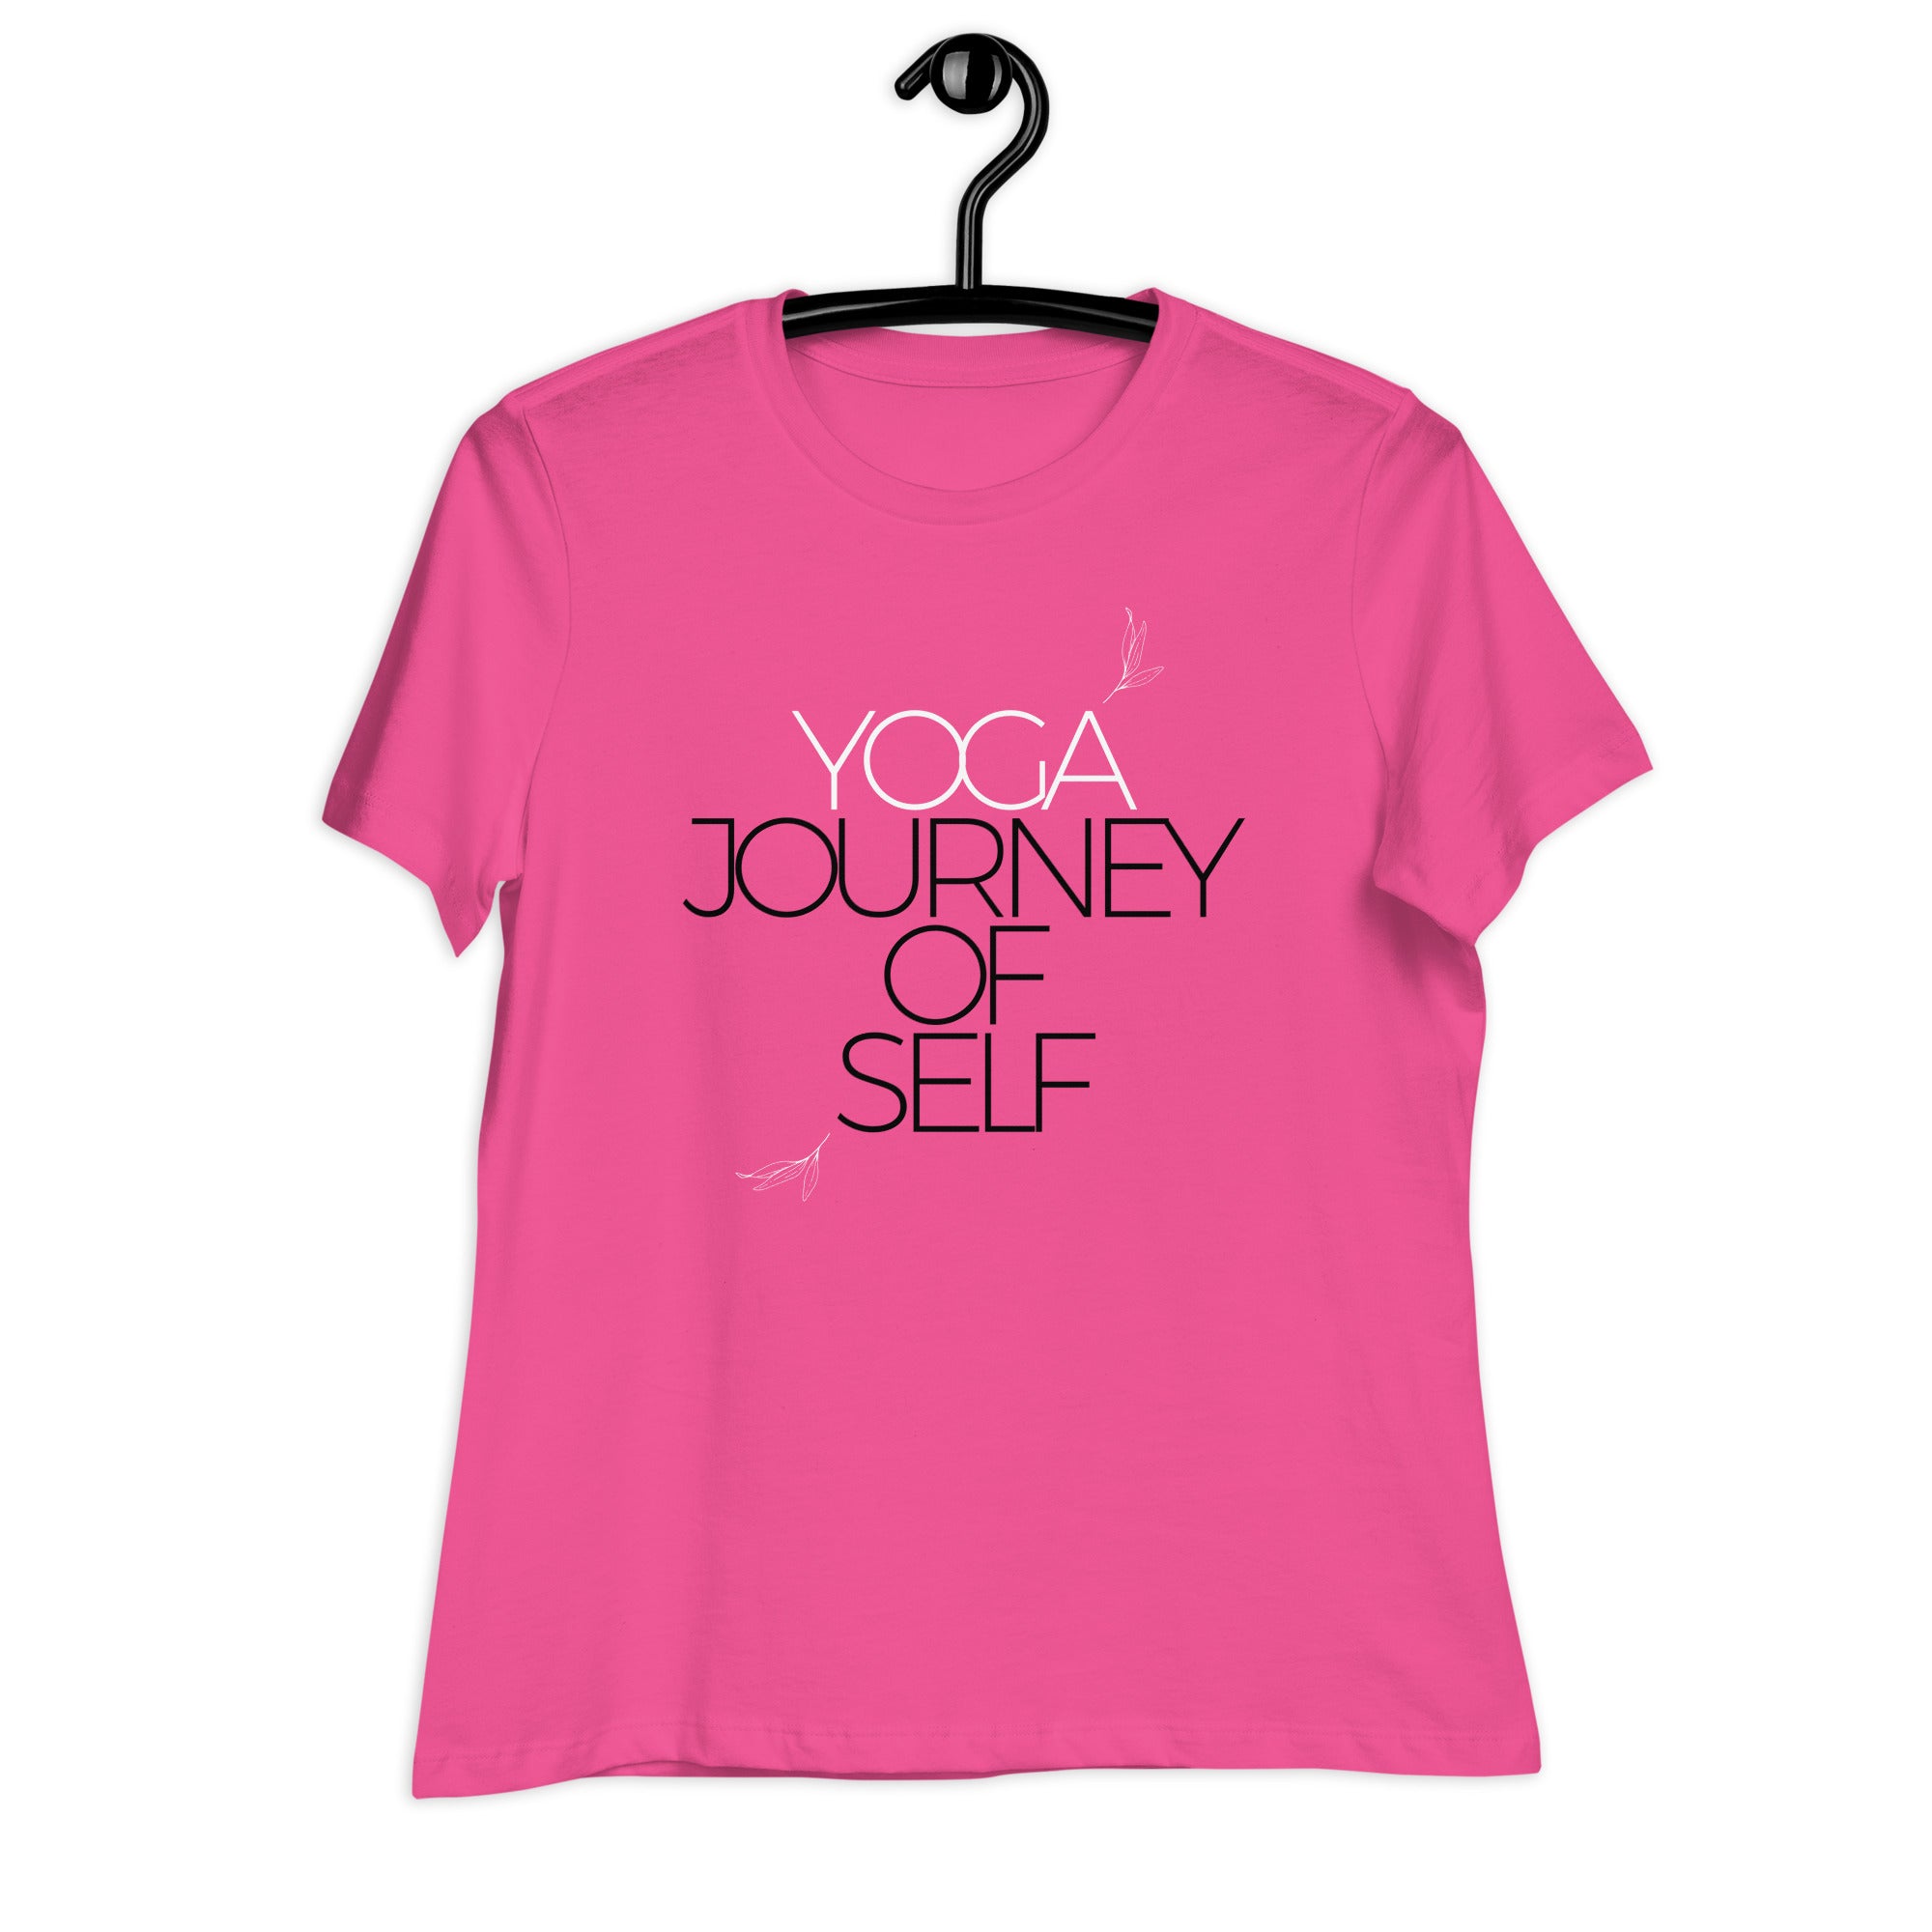 Yoga means Journey of Self Women's T-shirt - POD SARTO